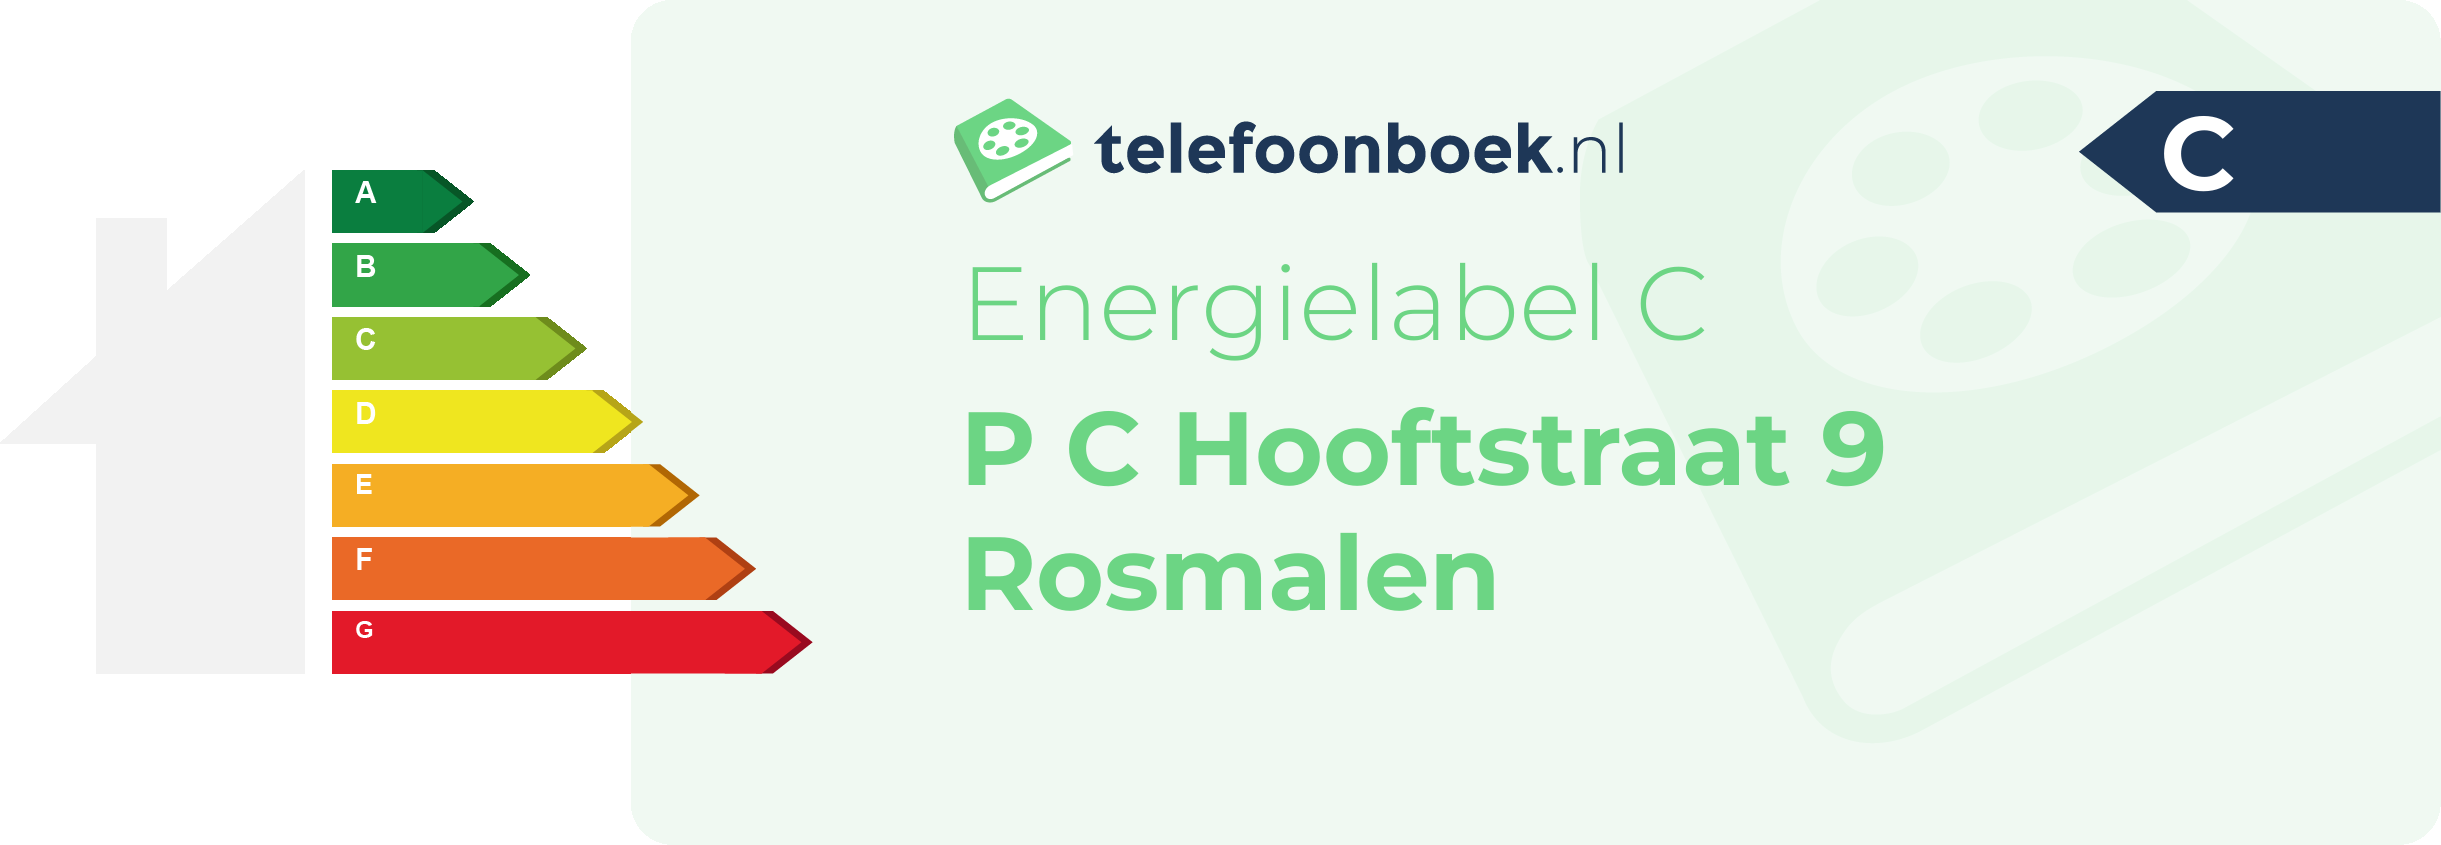 Energielabel P C Hooftstraat 9 Rosmalen